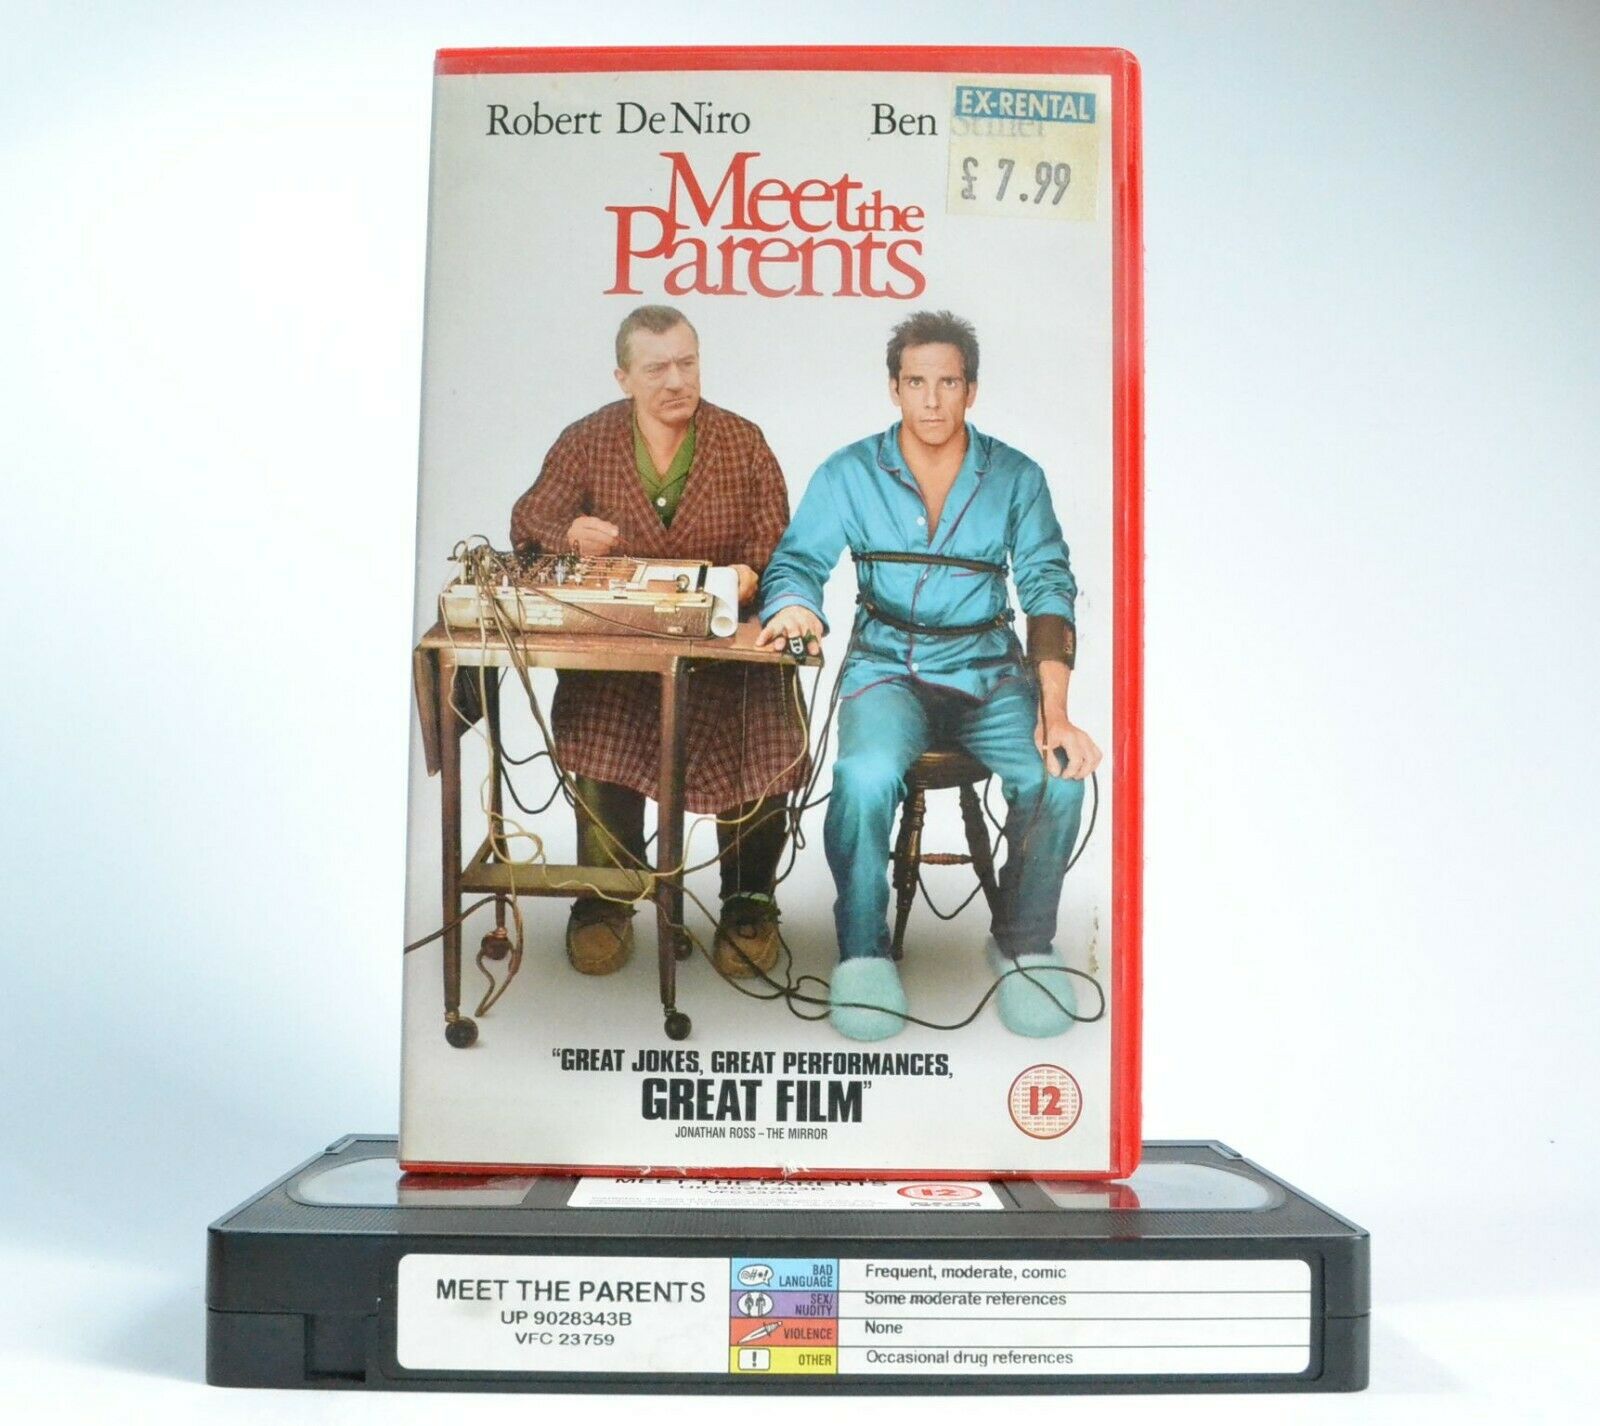 Meet The Parents: Series Of Unfortunate Events - Comedy - Robert De Niro - VHS-